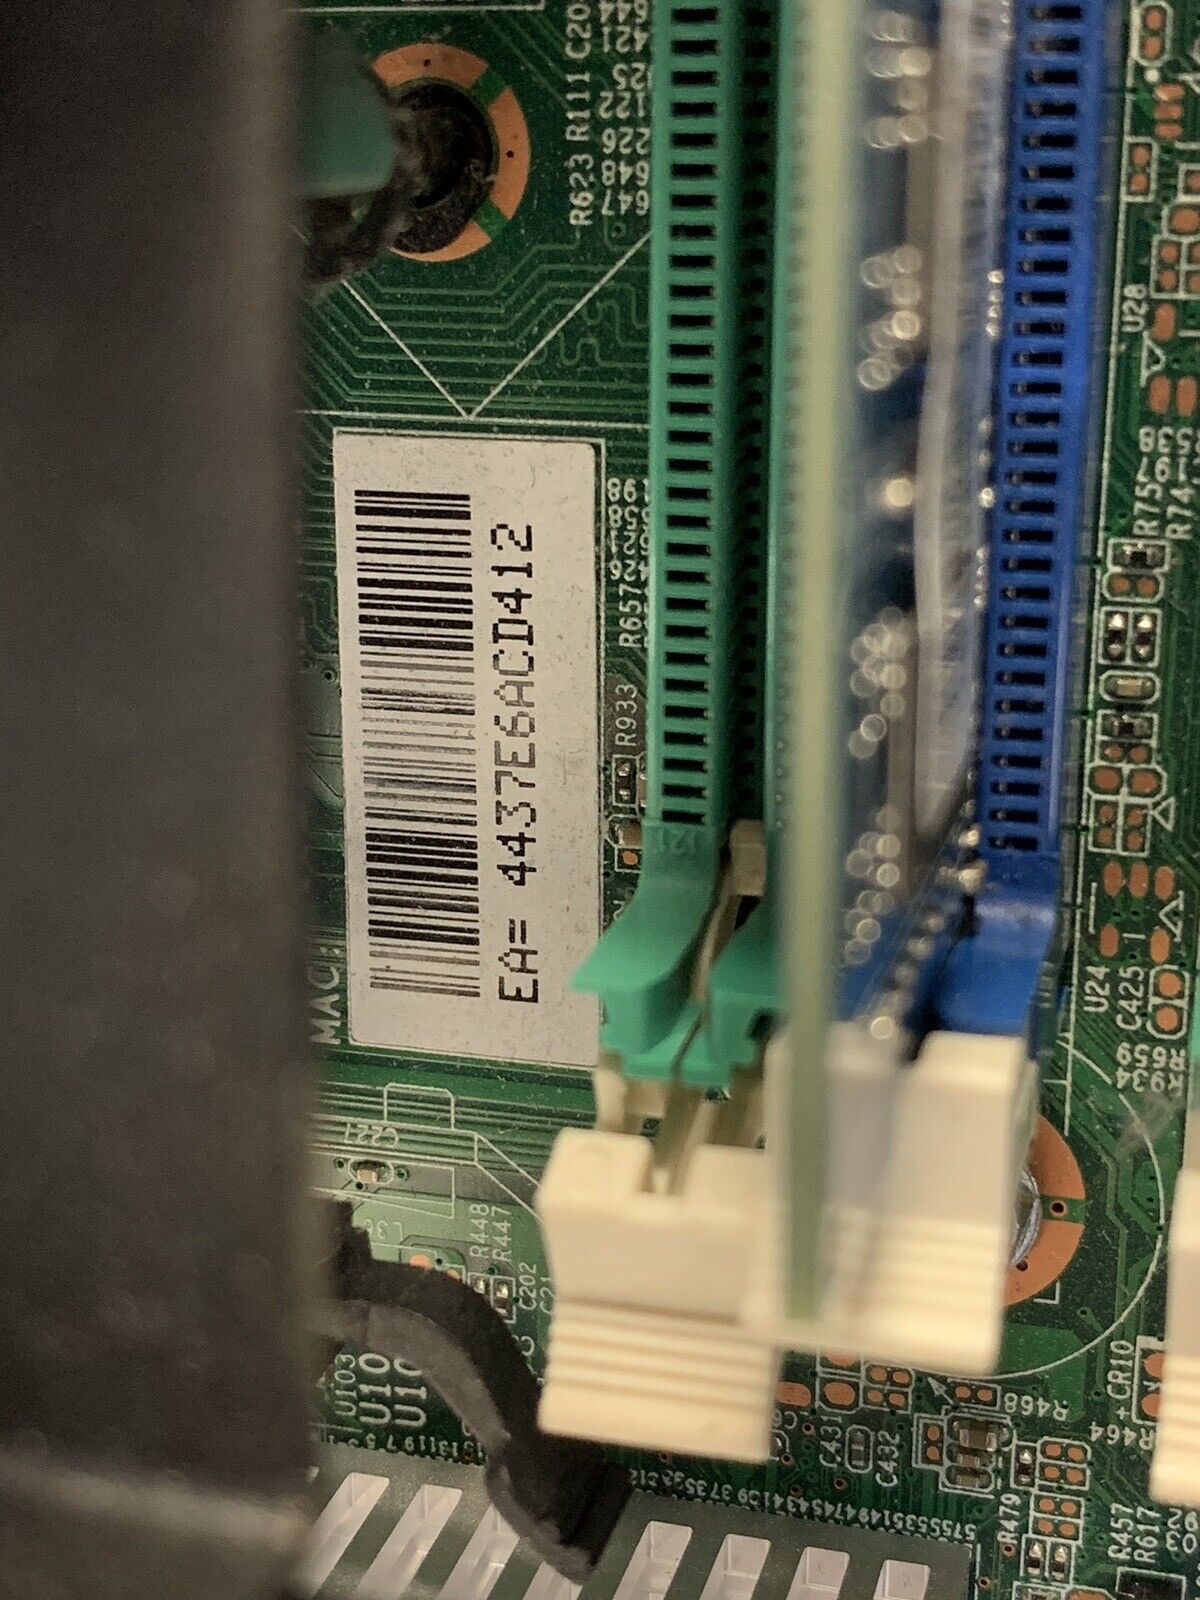 Lenovo ThinkCenre M81 DT Intel Core i5-2400 3.1GHz 4GB RAM No HDD No OS